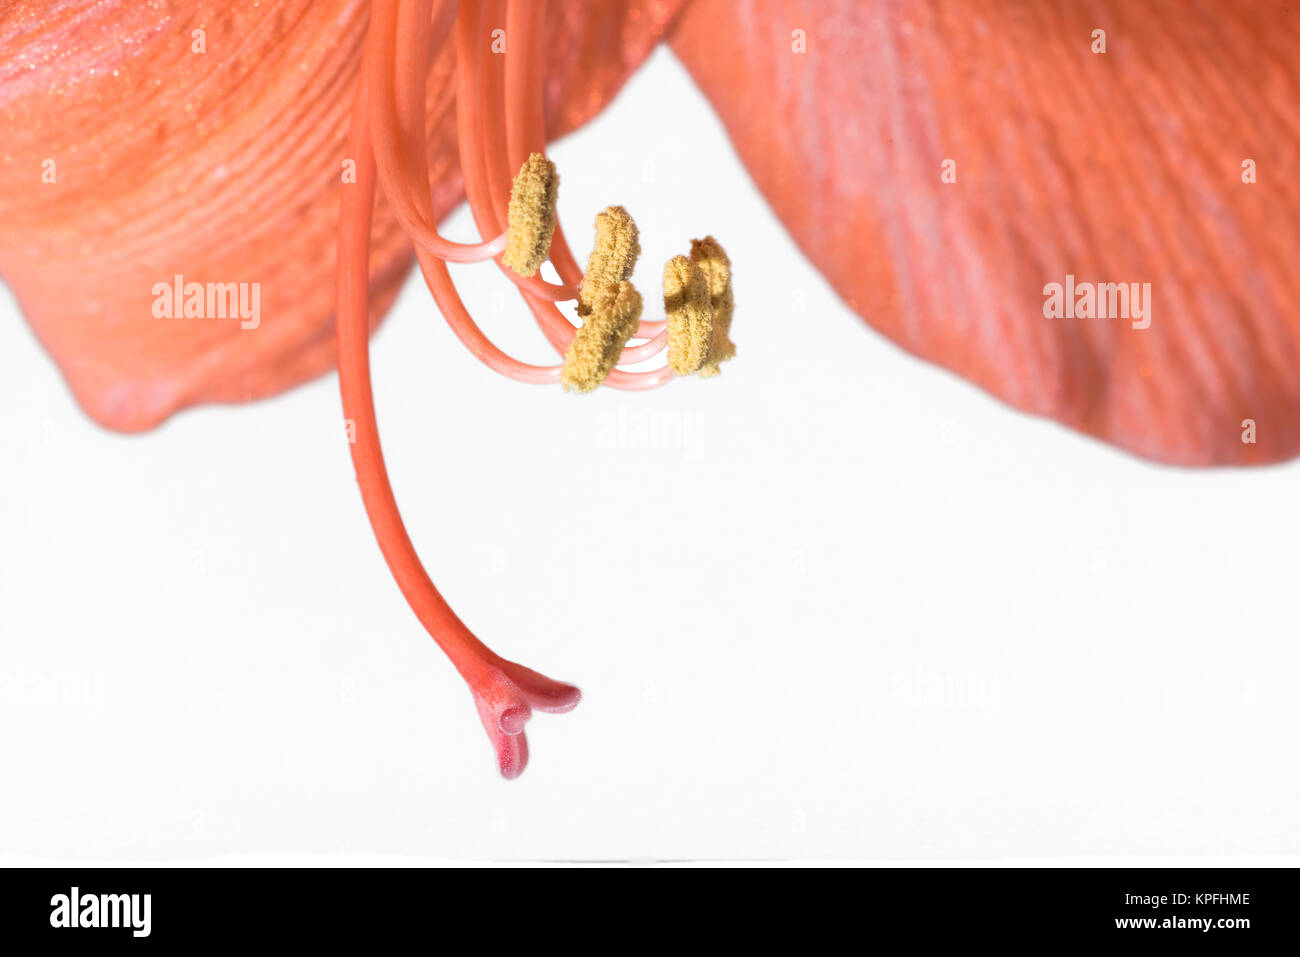 Closeup of pollen grains on the stamen of an amaryllis Stock Photo